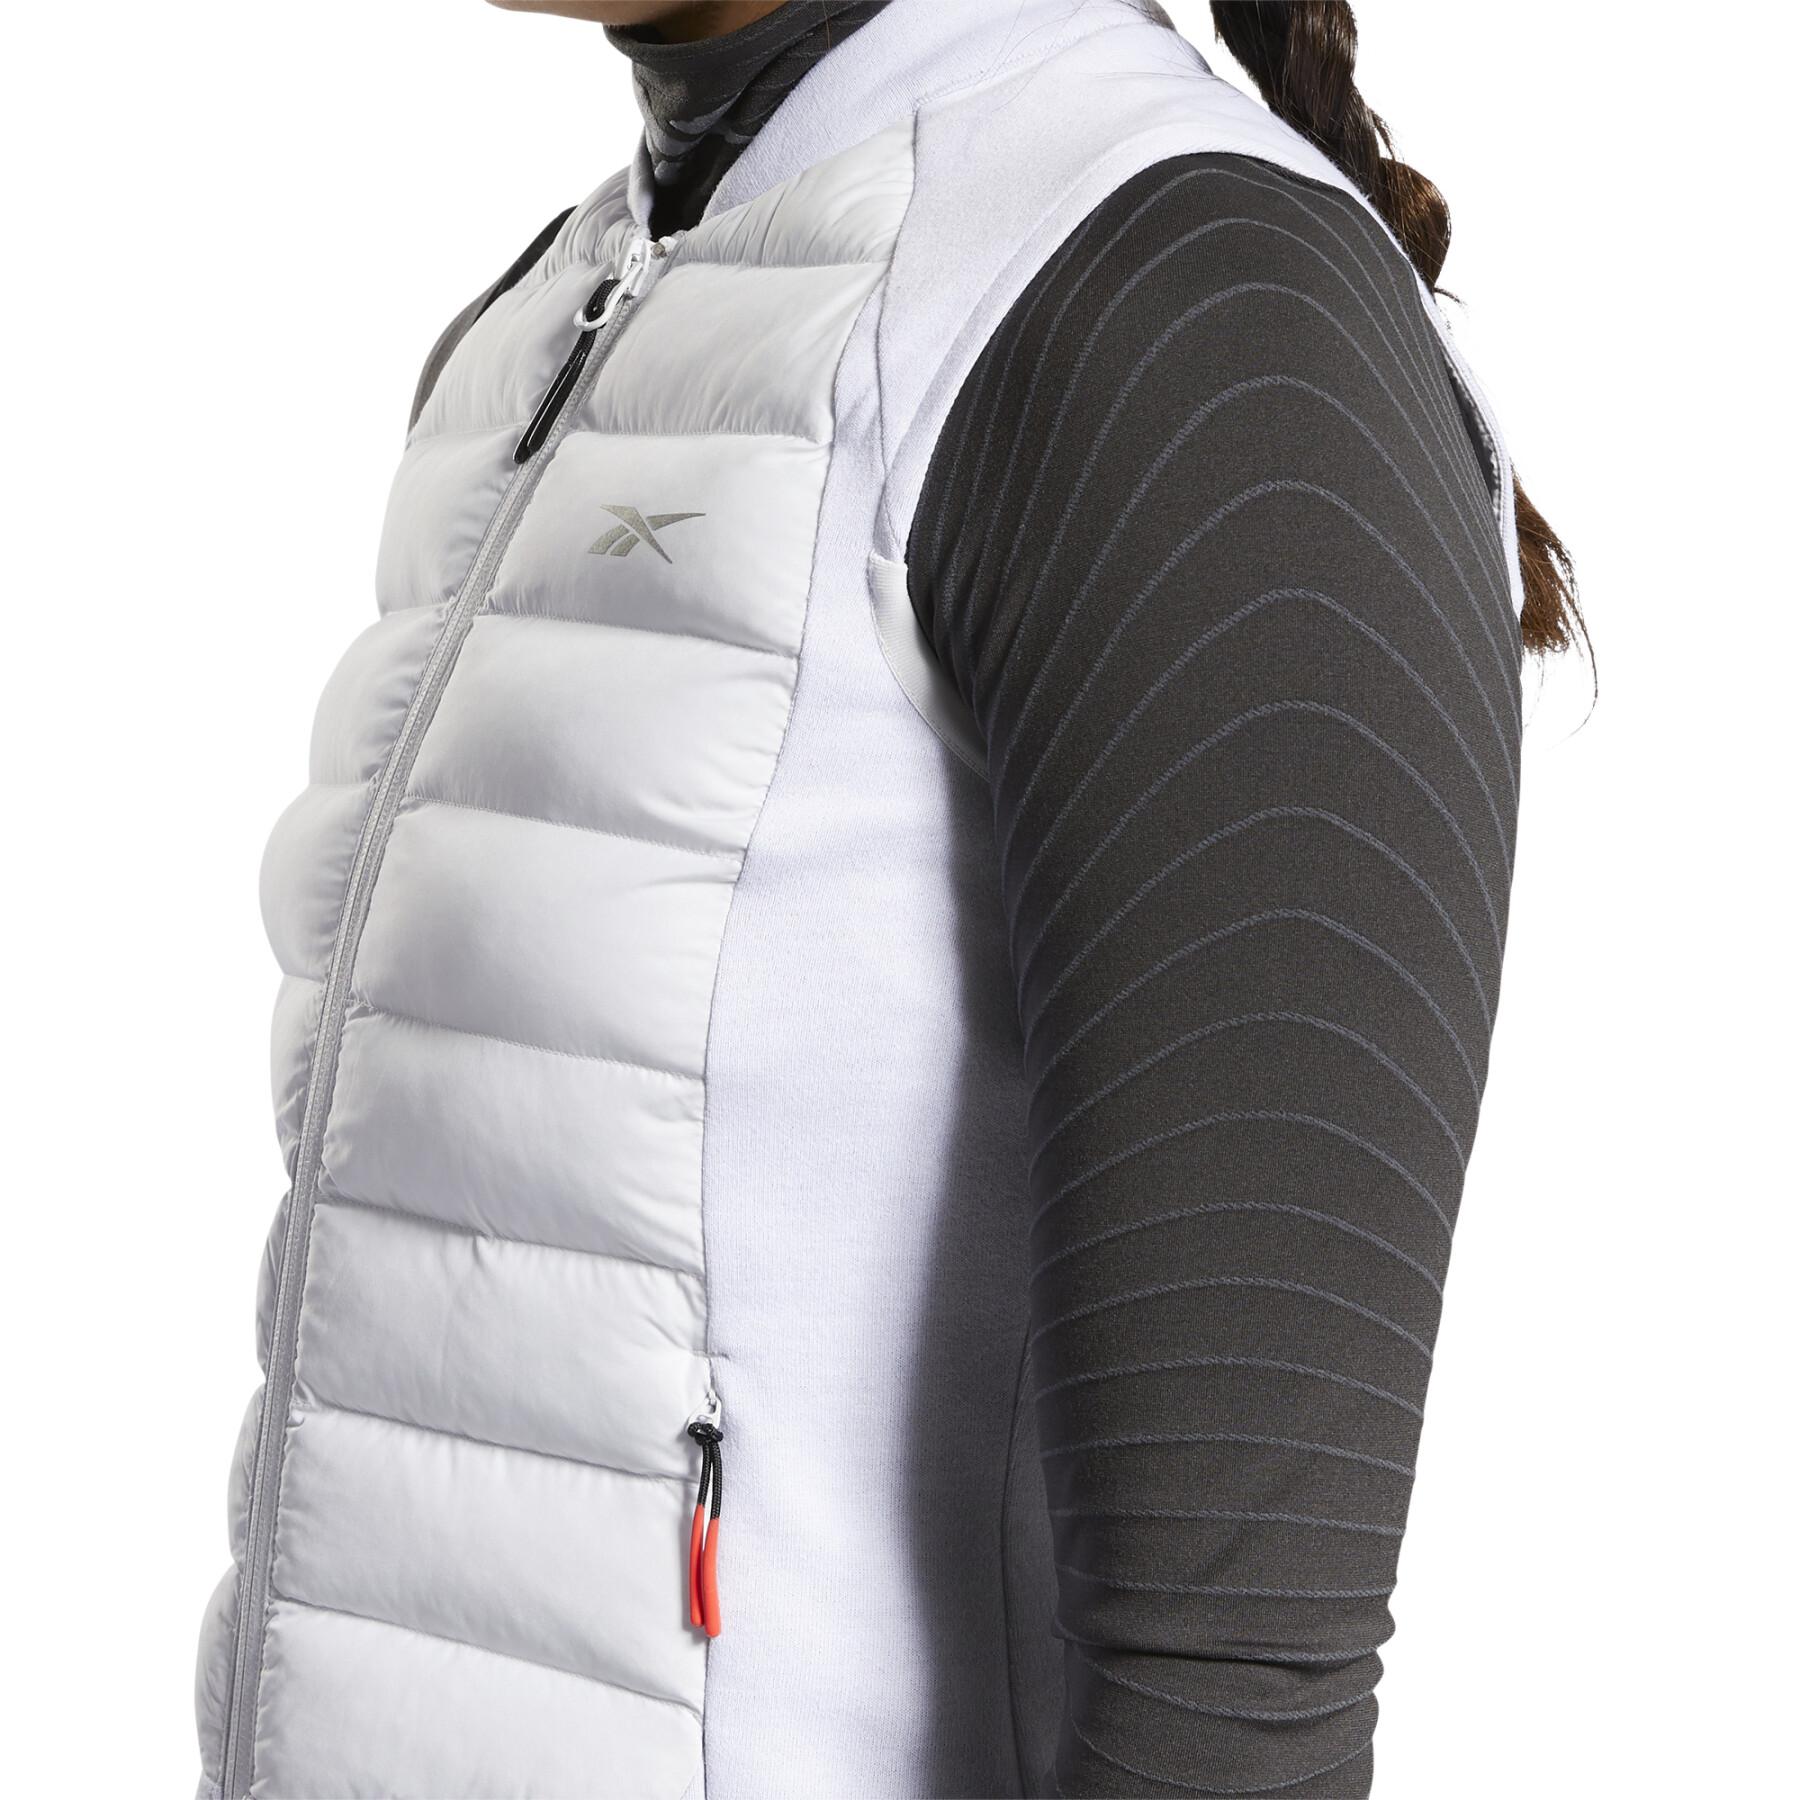 Women's sleeveless jacket Reebok DMX Training Hybrid